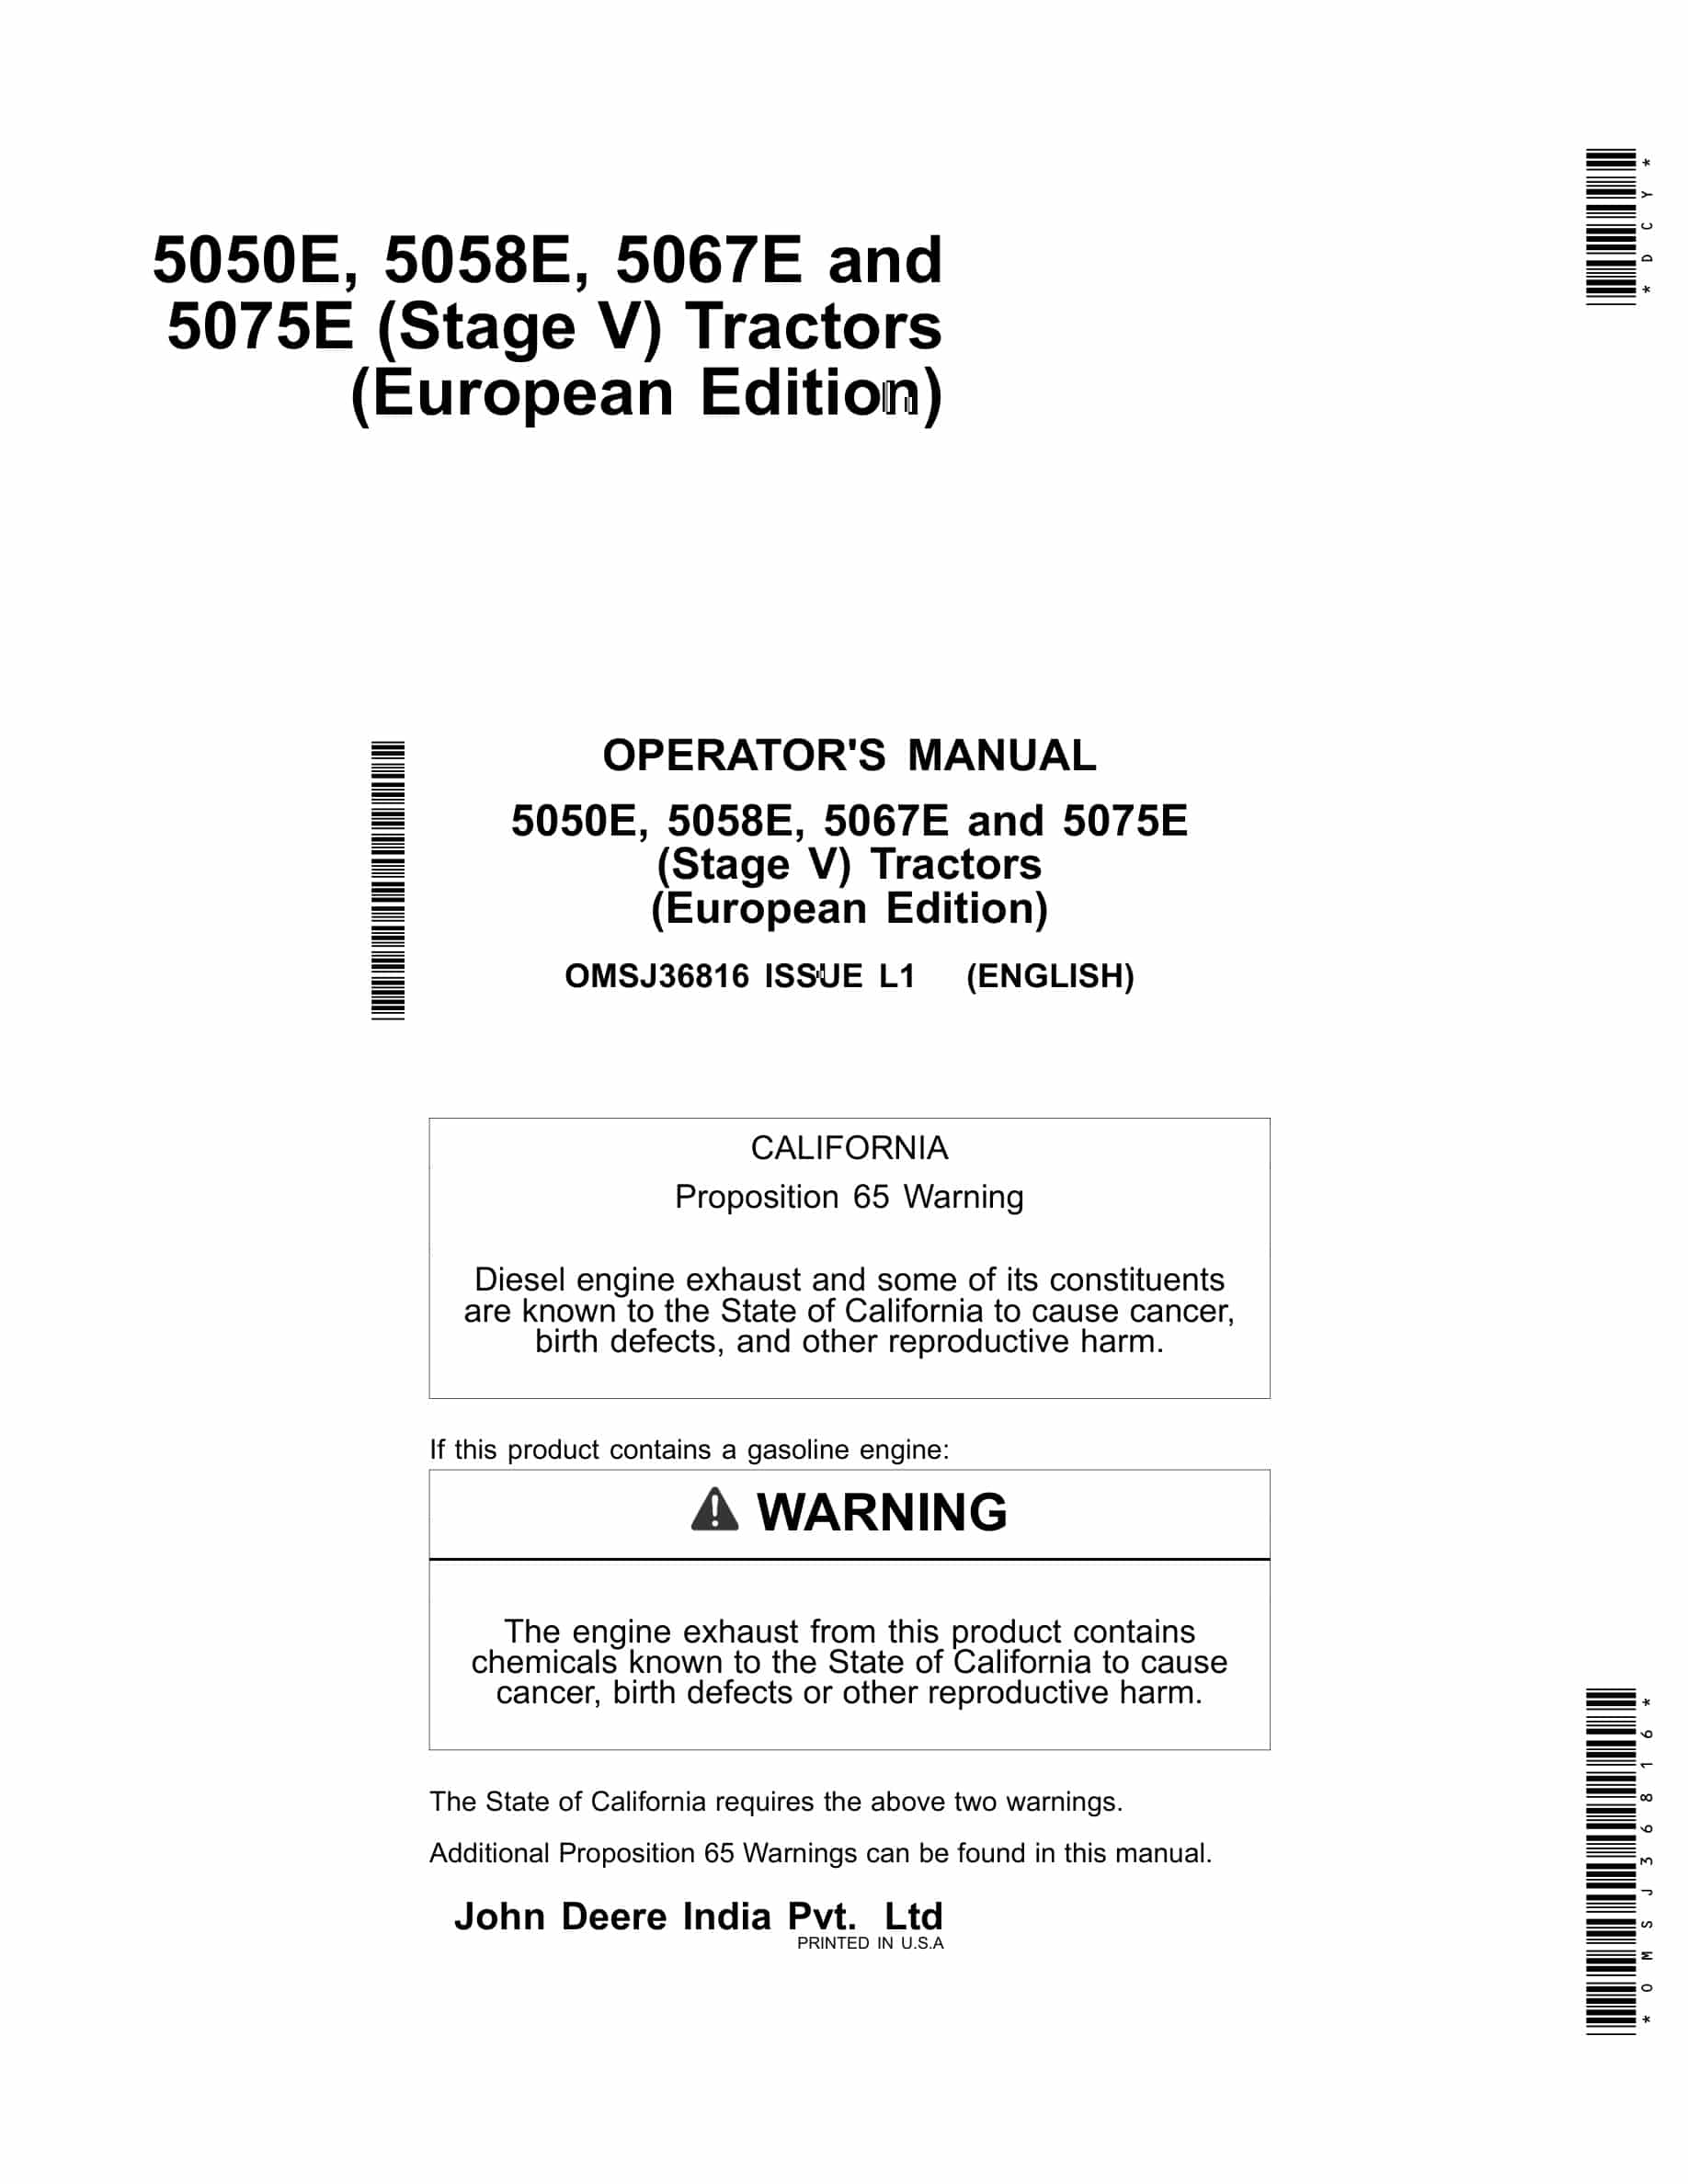 John Deere 5050e, 5058e, 5067e And 5075e (stage V) Tractors Operator Manuals OMSJ36816-1